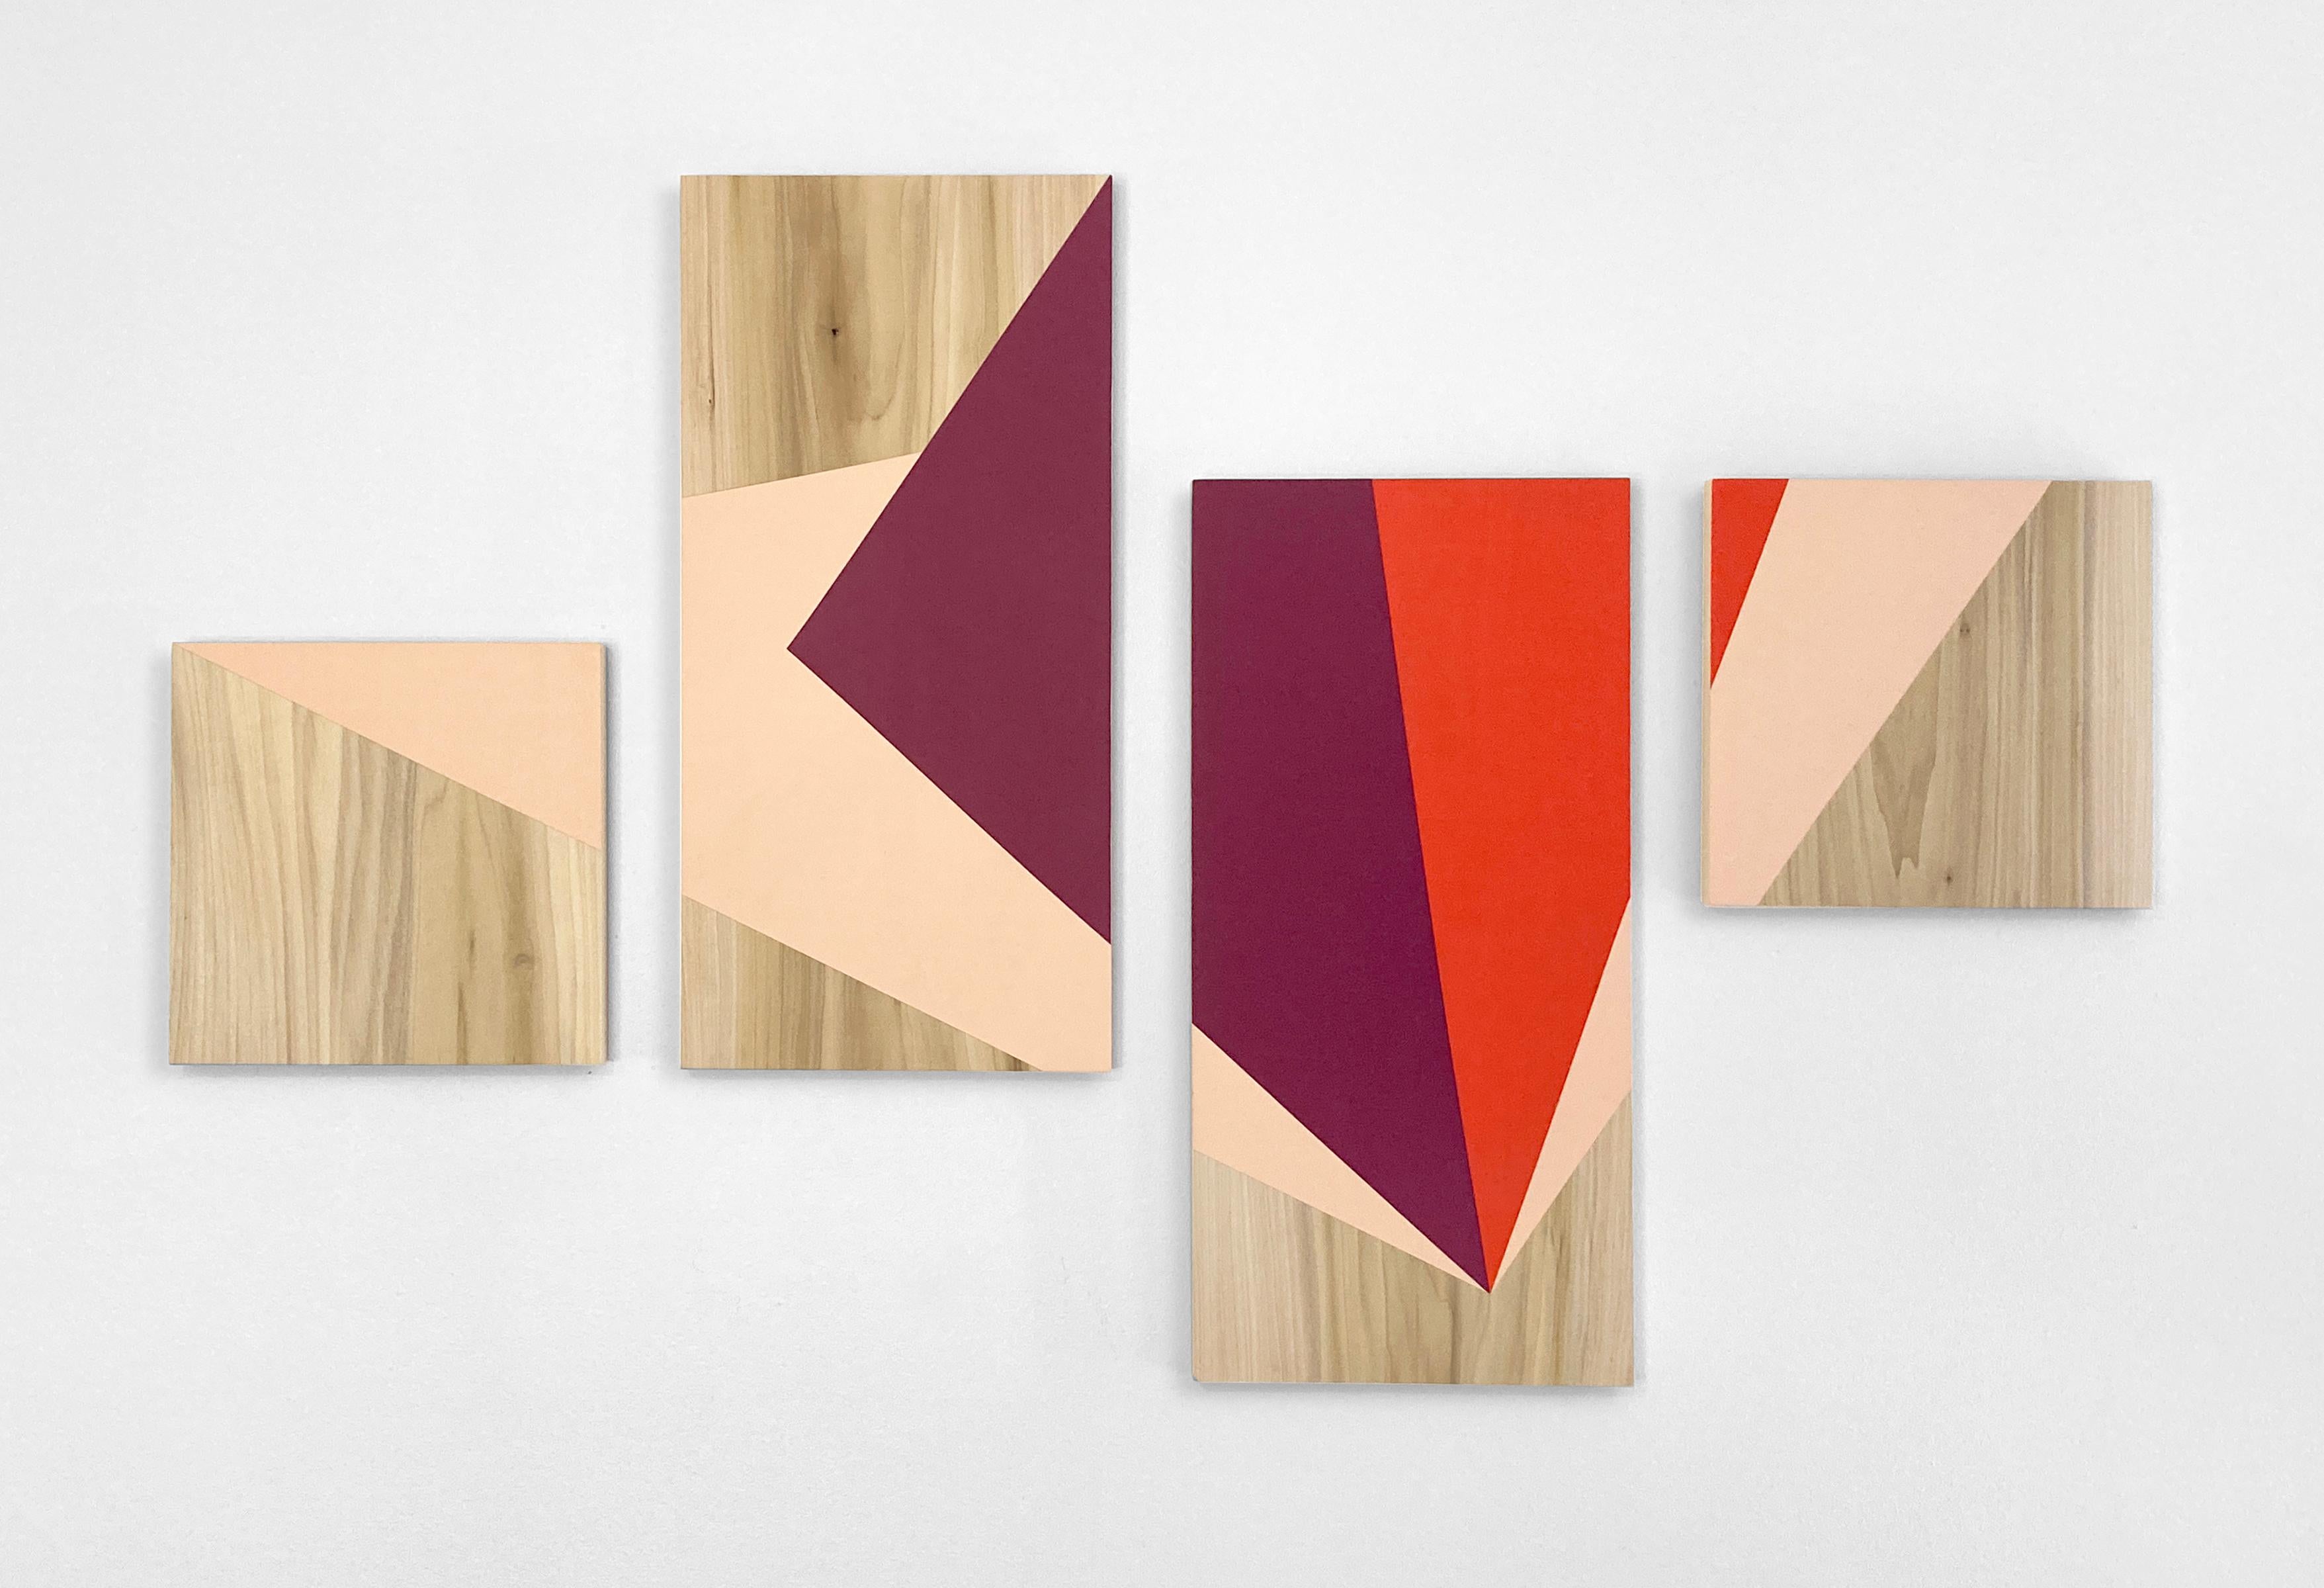 'Apex' - colorful minimalist work on panel - wood grain - Carmen Herrera - Sculpture by Nancy Talero